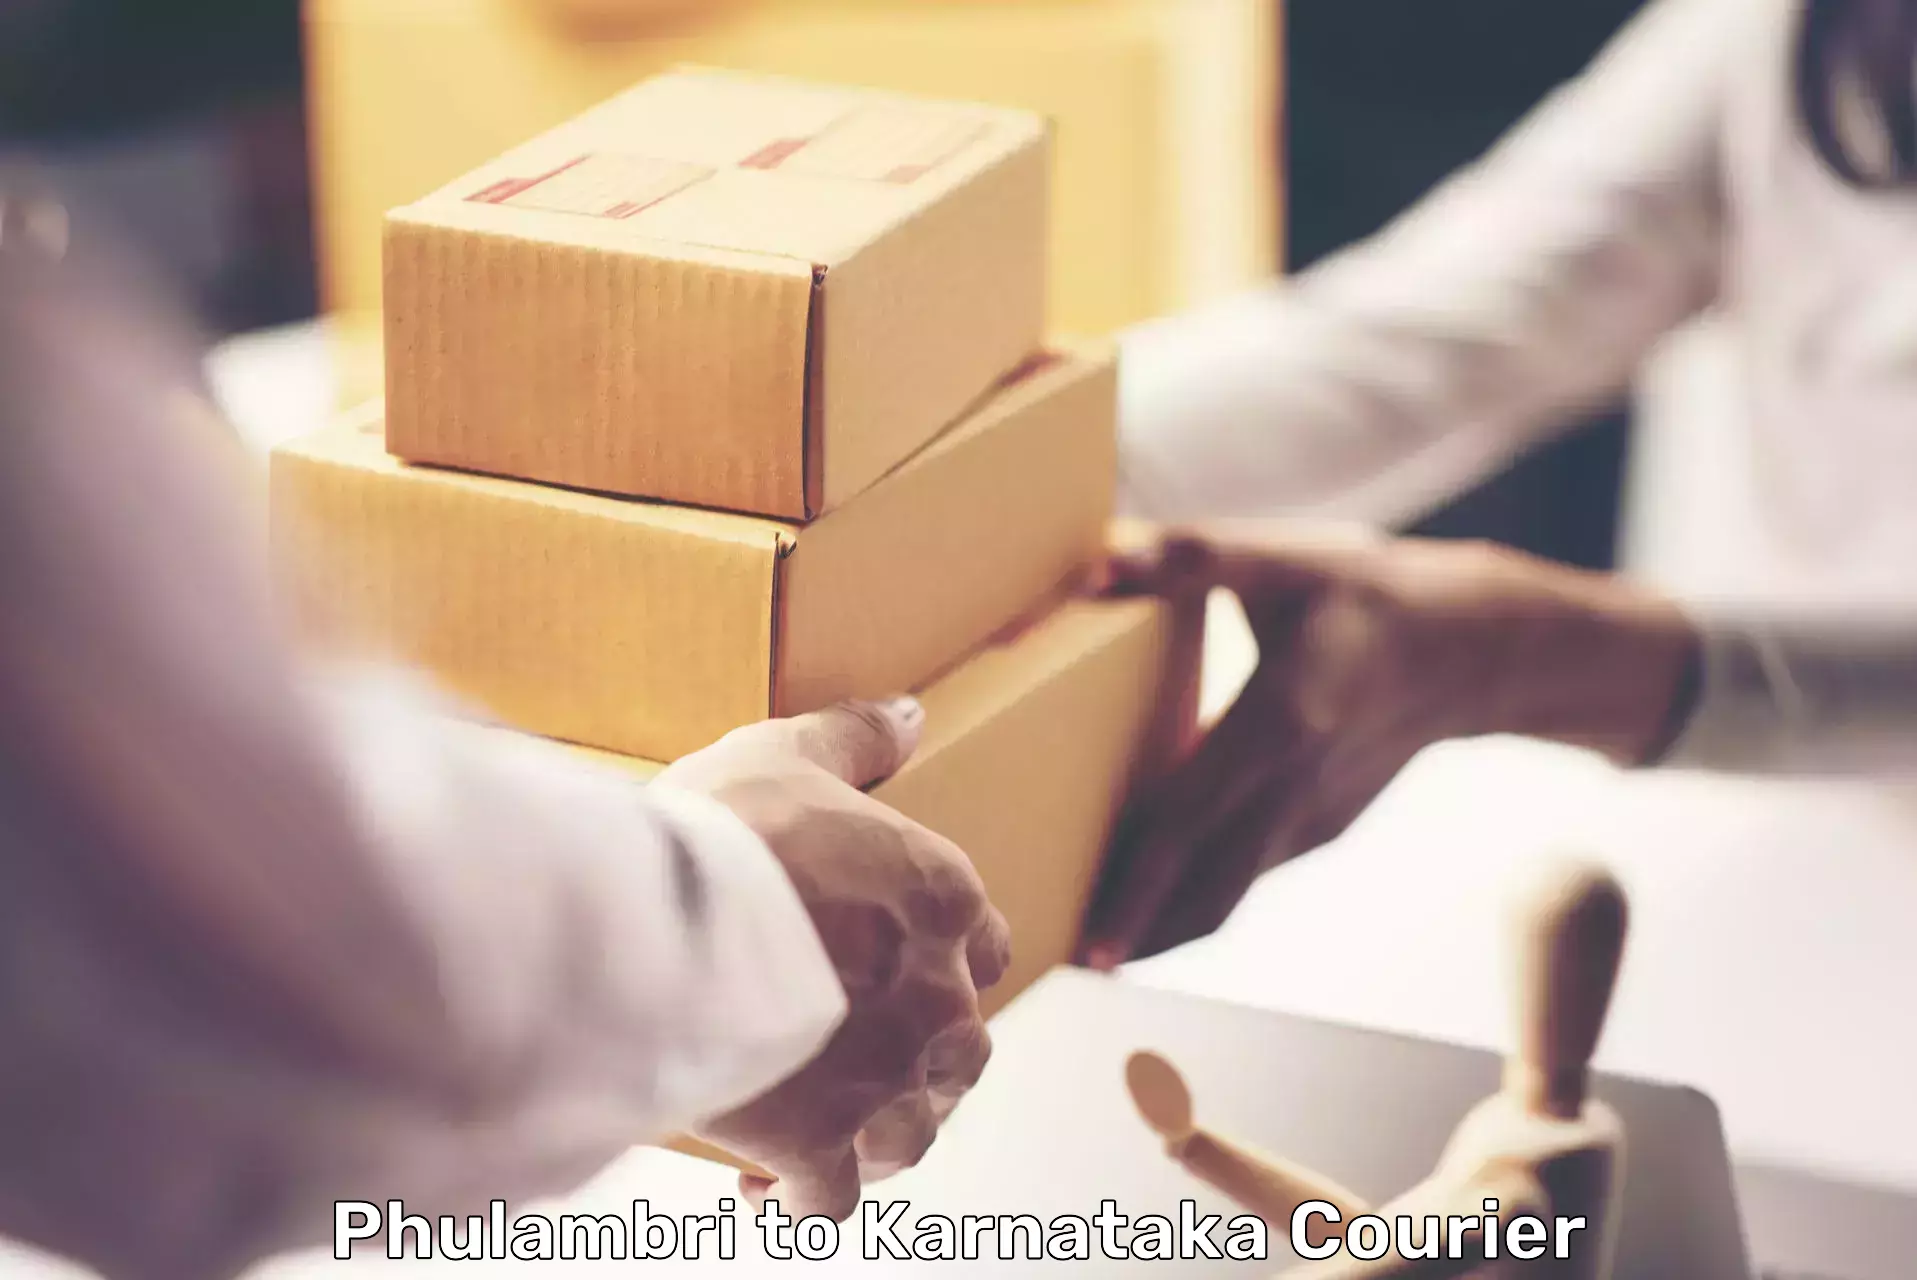 24/7 courier service in Phulambri to Karnataka